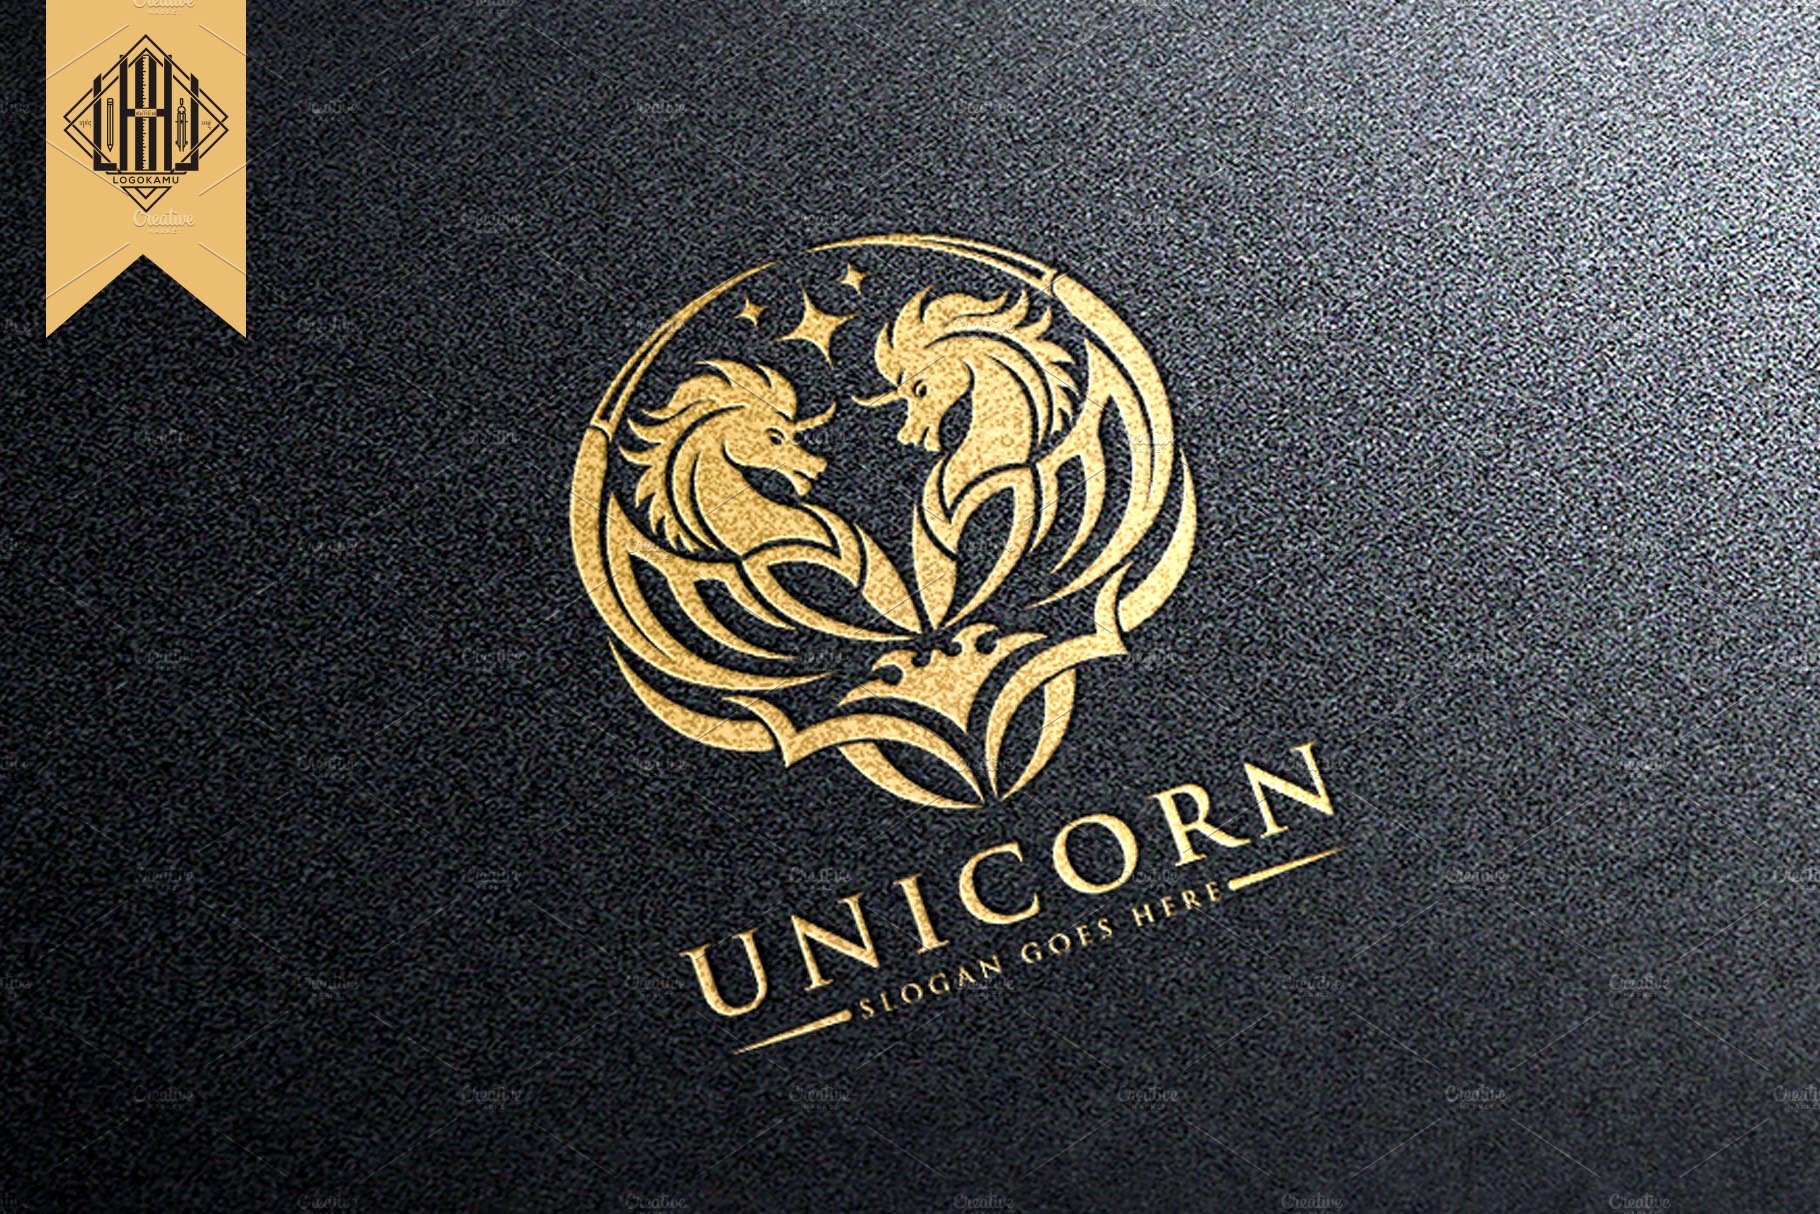 Unicorn Logo preview image.